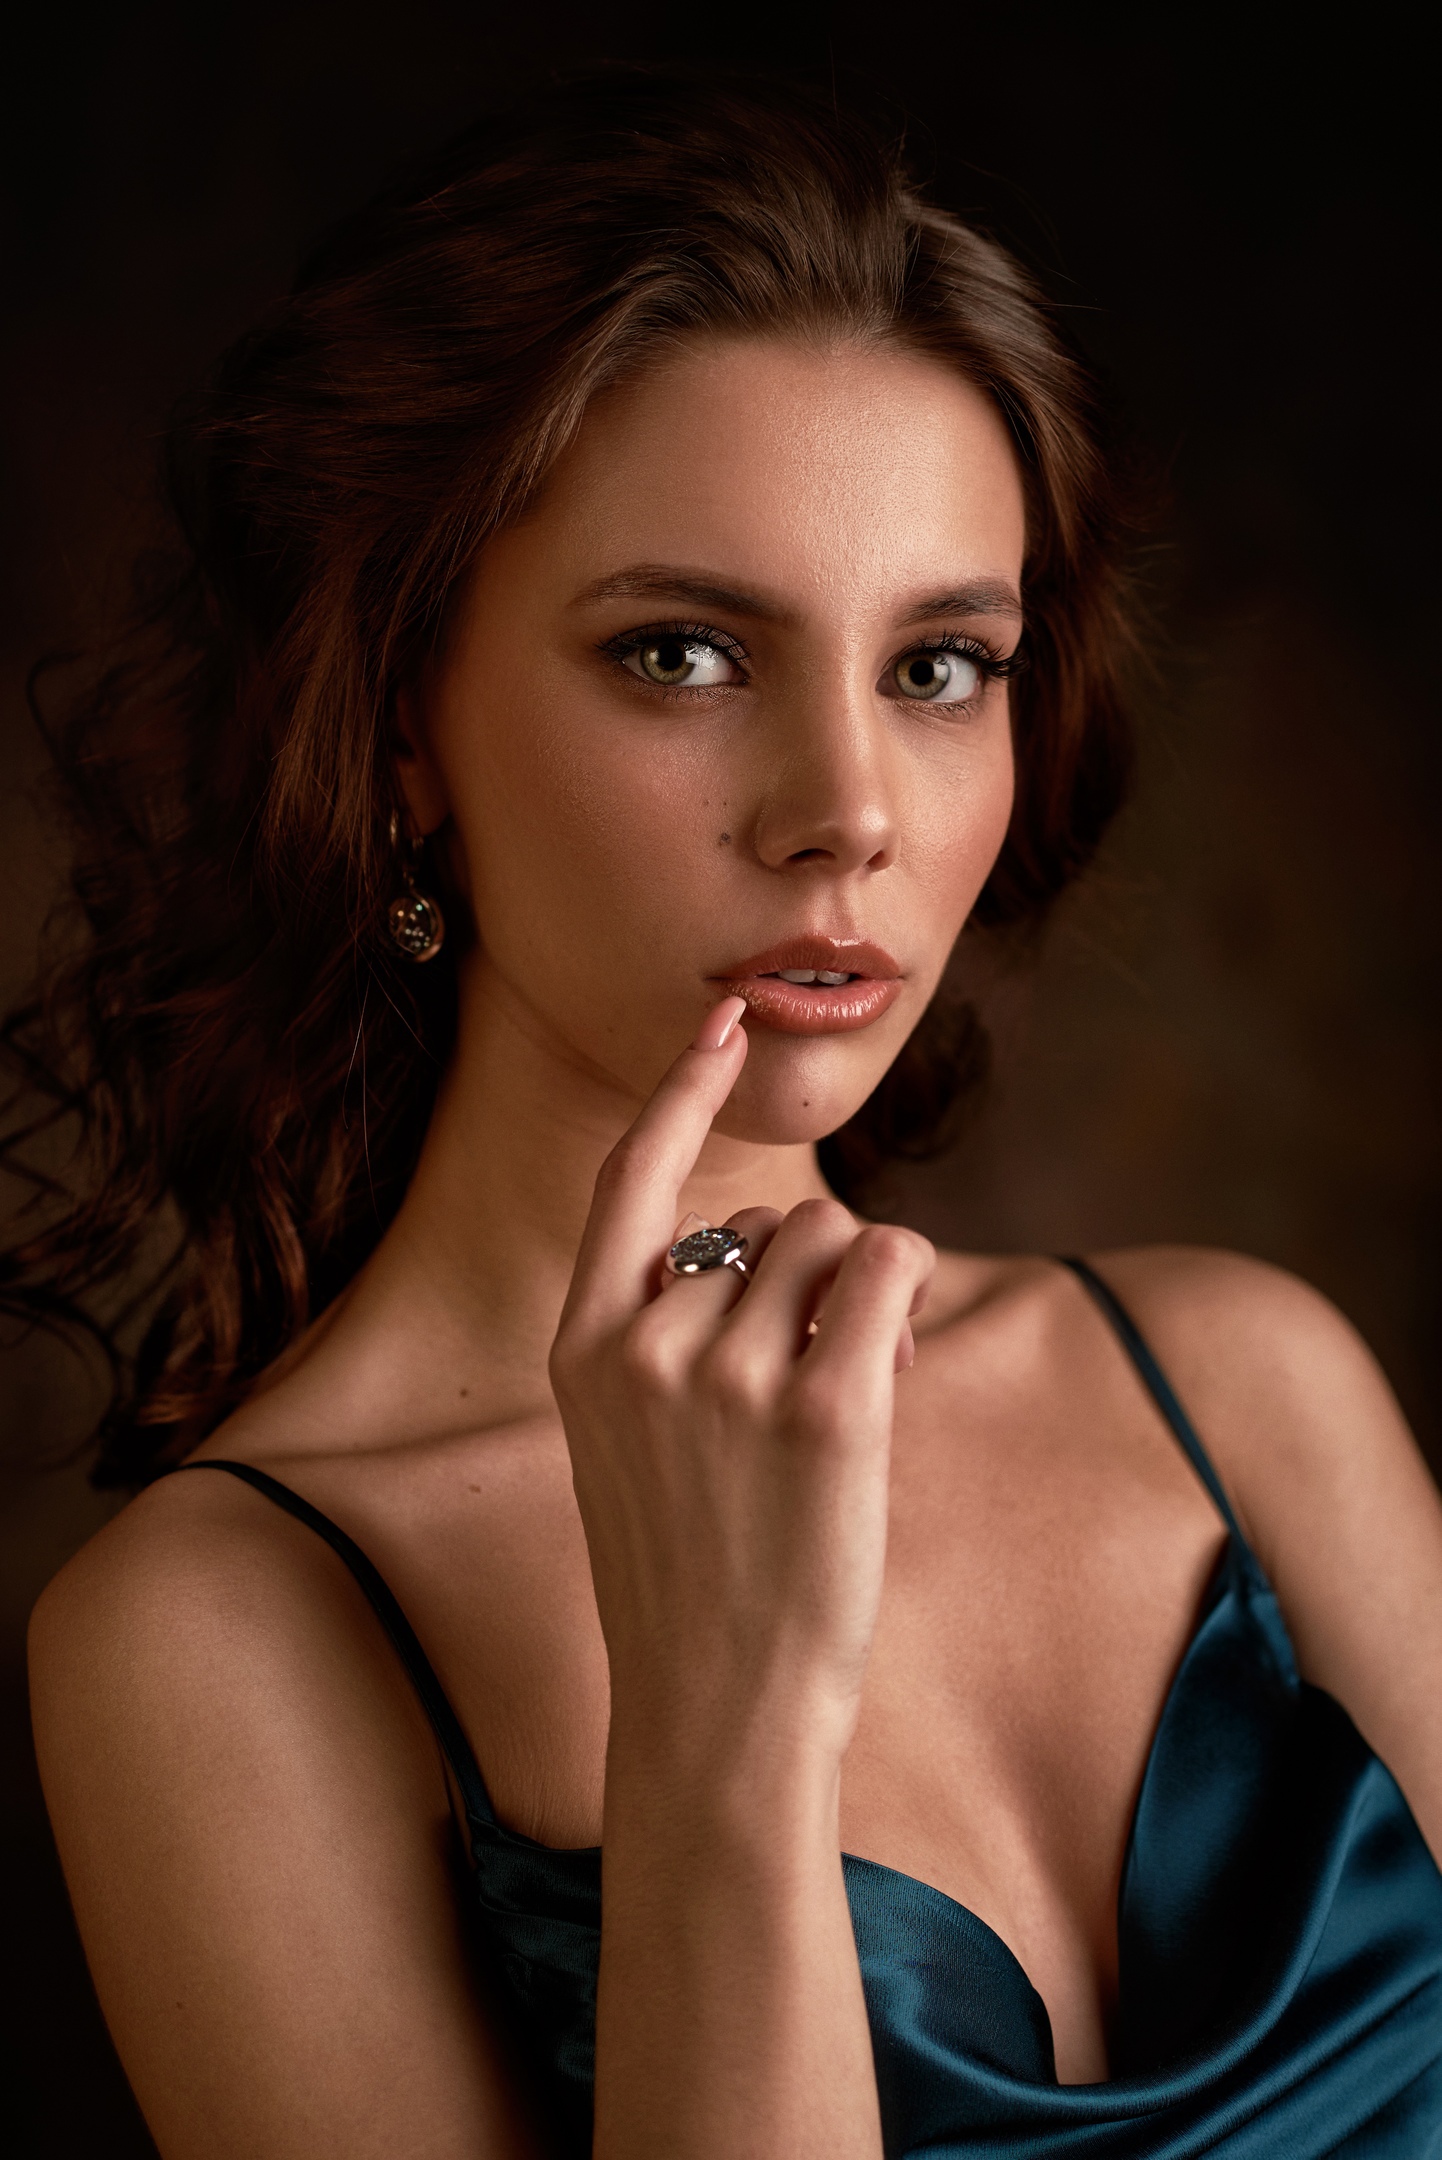 Max Pyzhik Women Maria Rykova Brunette Looking At Viewer Makeup Dress Jewelry Blue Clothing